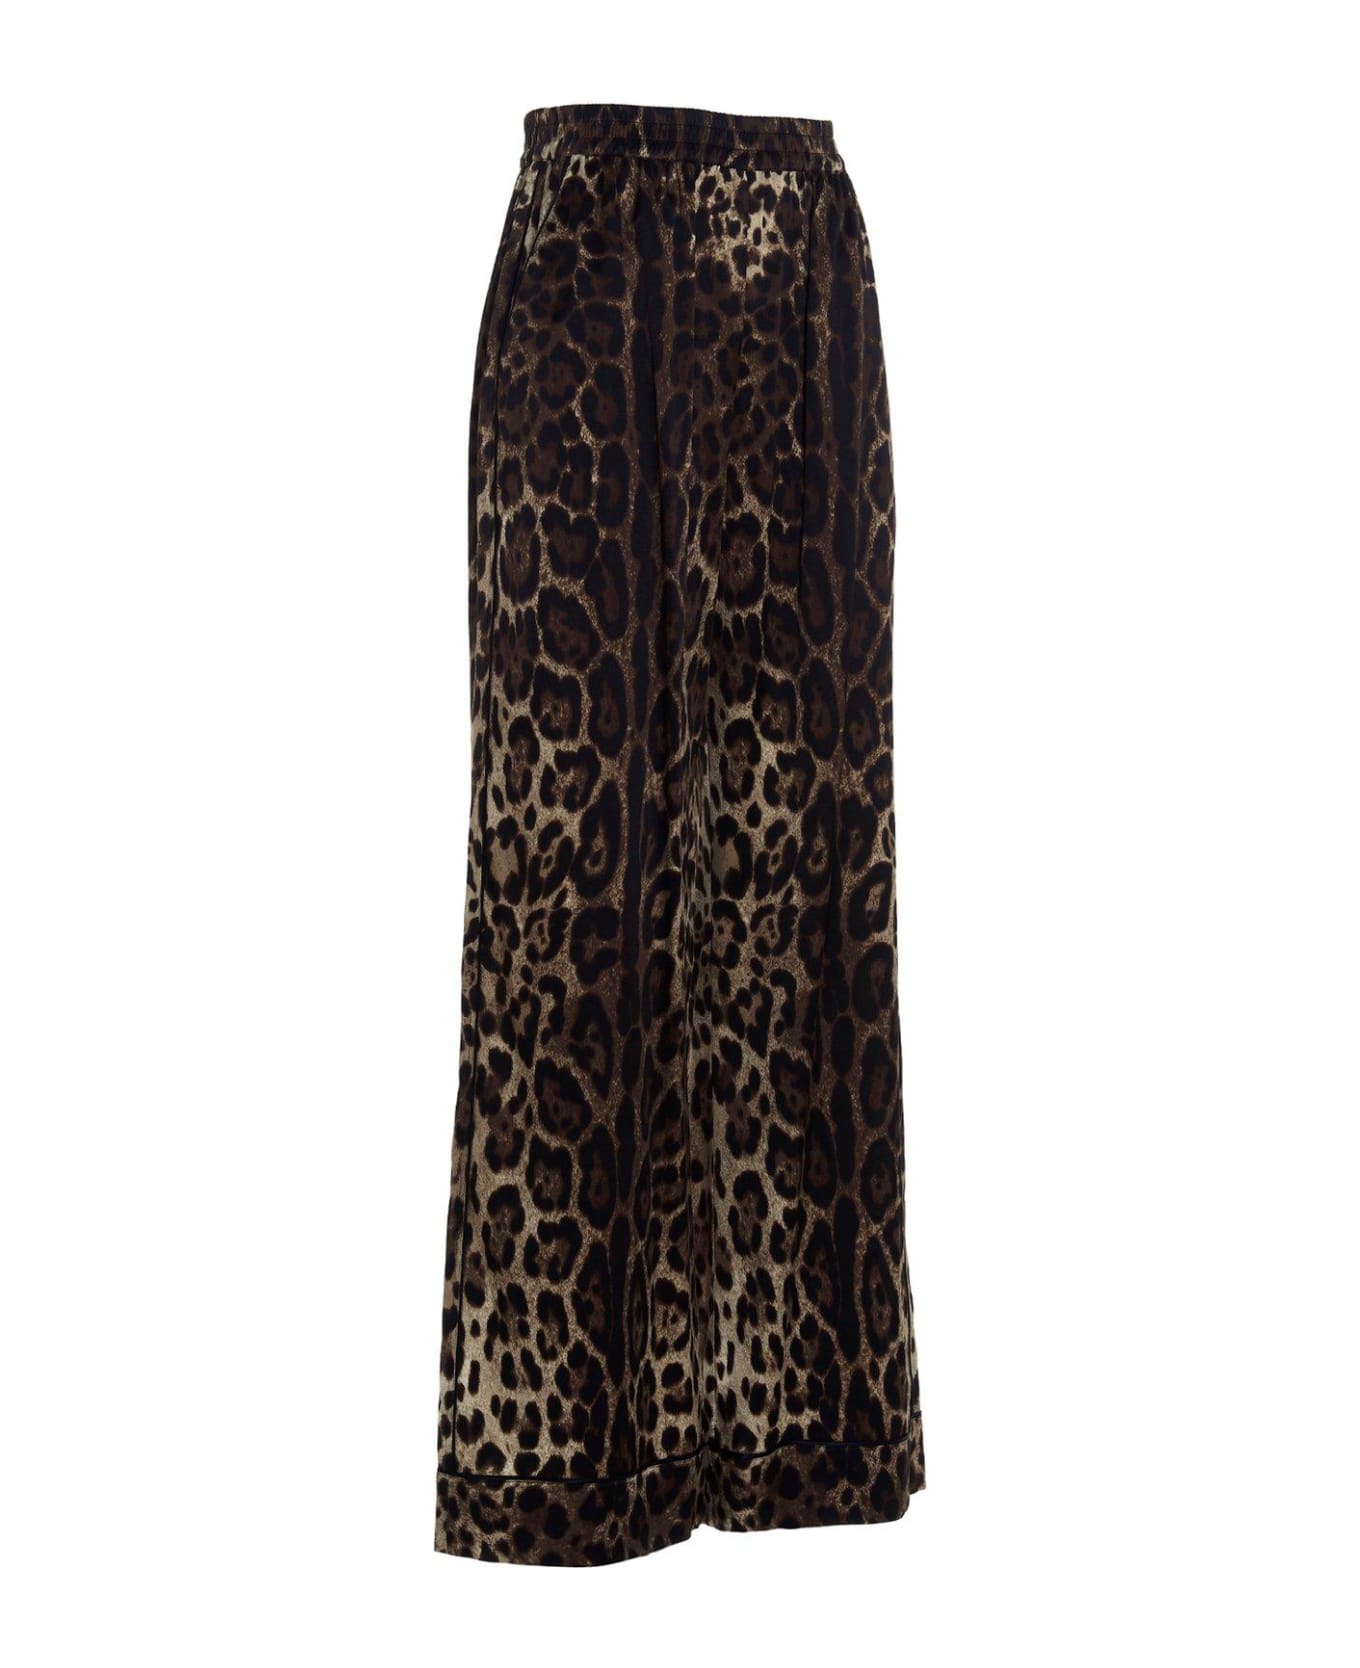 Dolce & Gabbana Leopard Print Pants